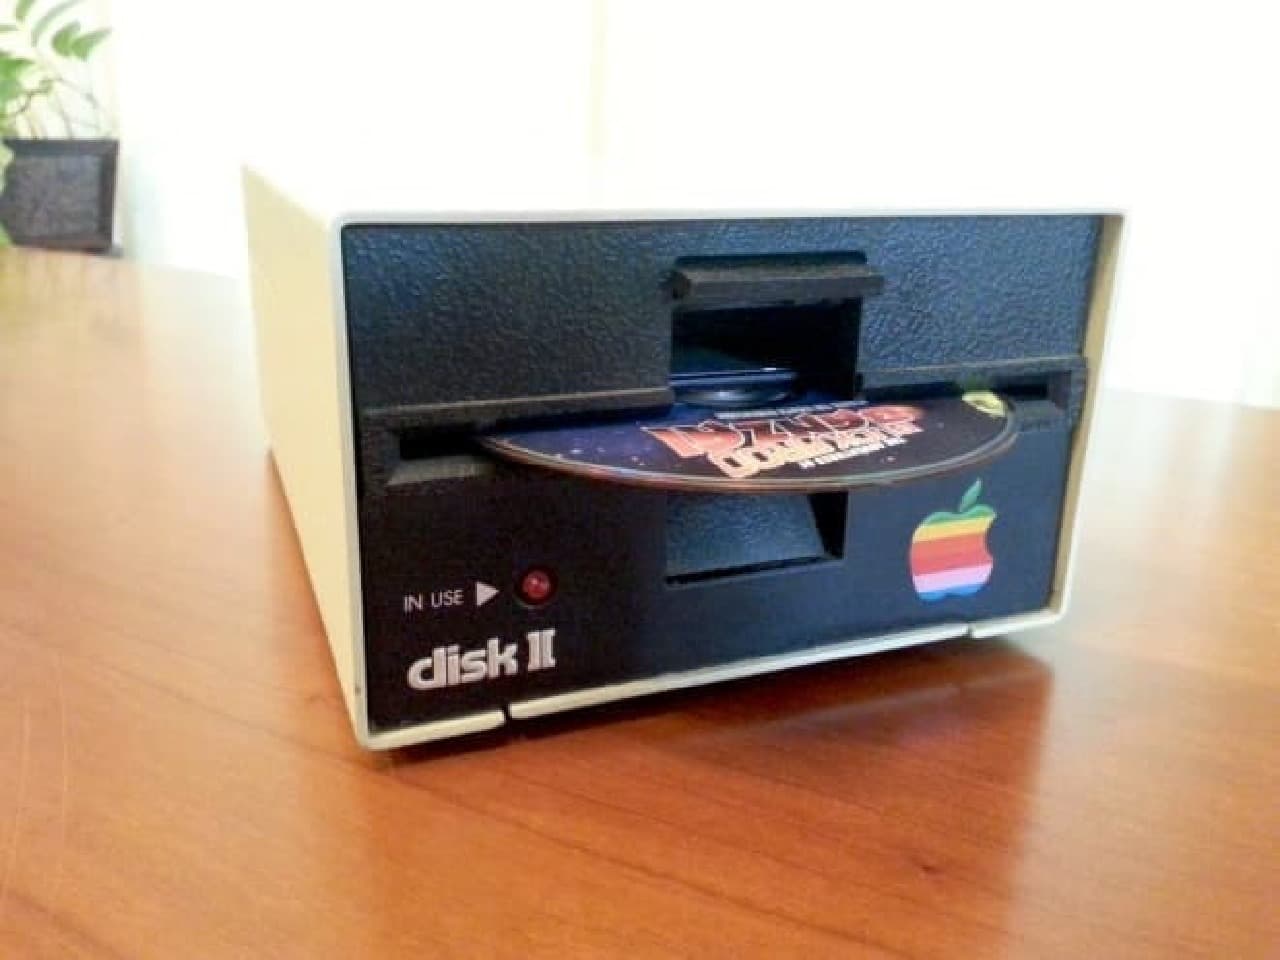 Blu-Ray/DVD drive in Disk II Floppy drive case